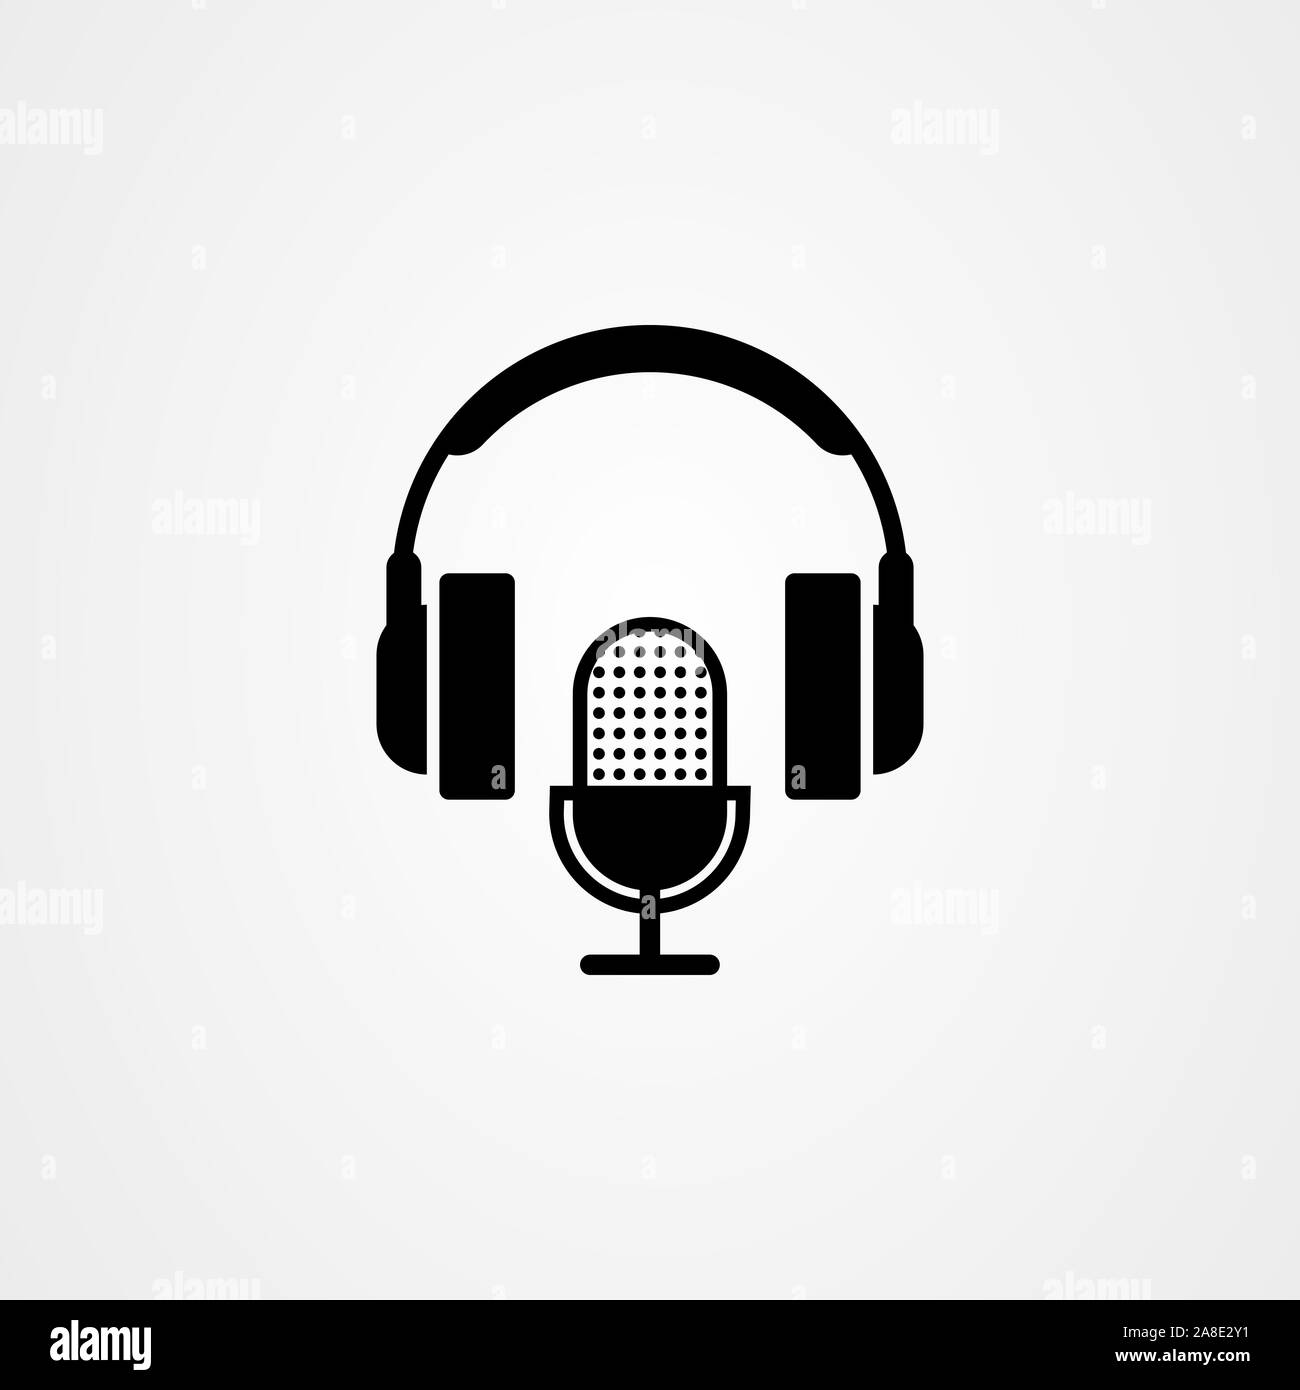 Microphone and headphone icon. Podcast or radio logo design Stock Vector  Image & Art - Alamy